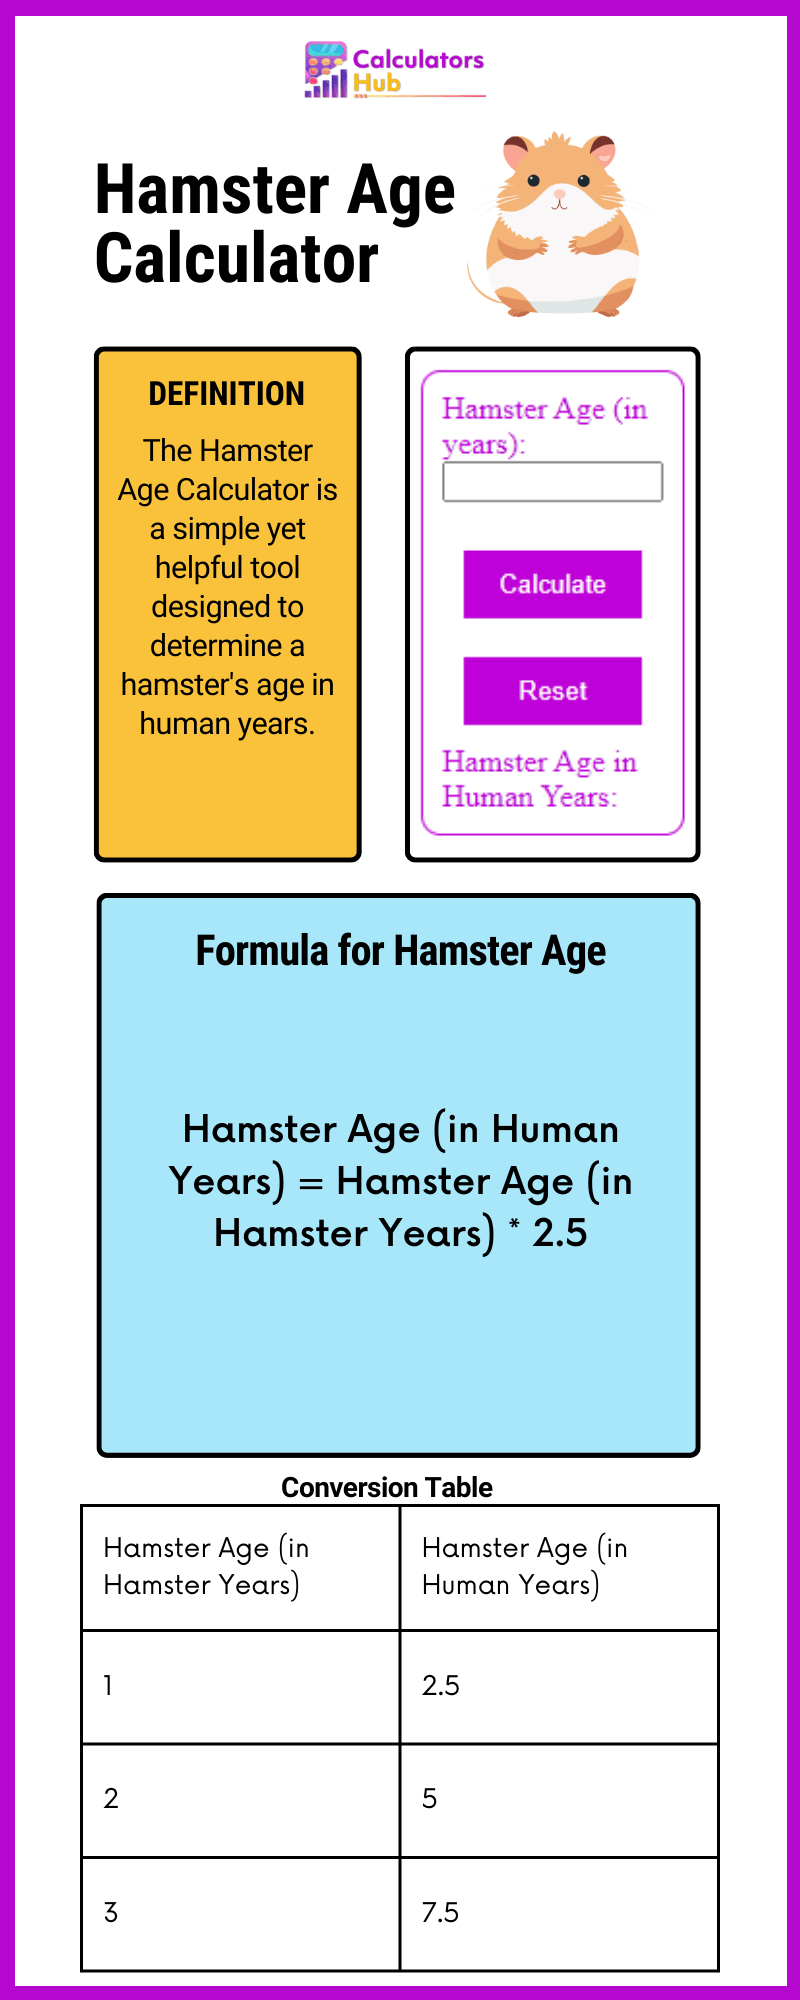 Hamster Age Calculator